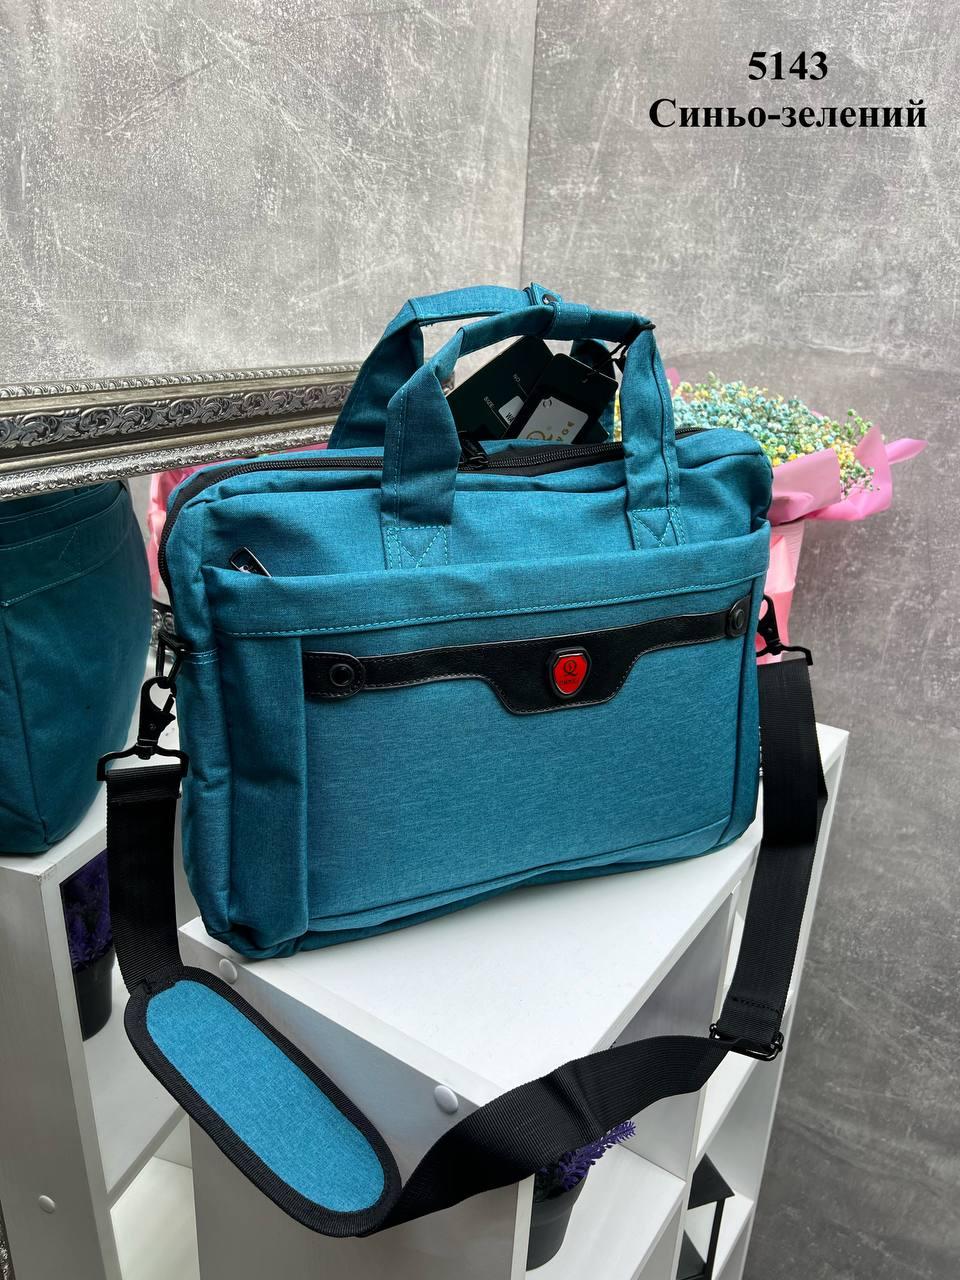 АКЦІЯ! Синьо-зелена - сумка для ноутбука з додатковими кишенями - велика, зручна та стильна - 40х30х10 см (5143), фото 2